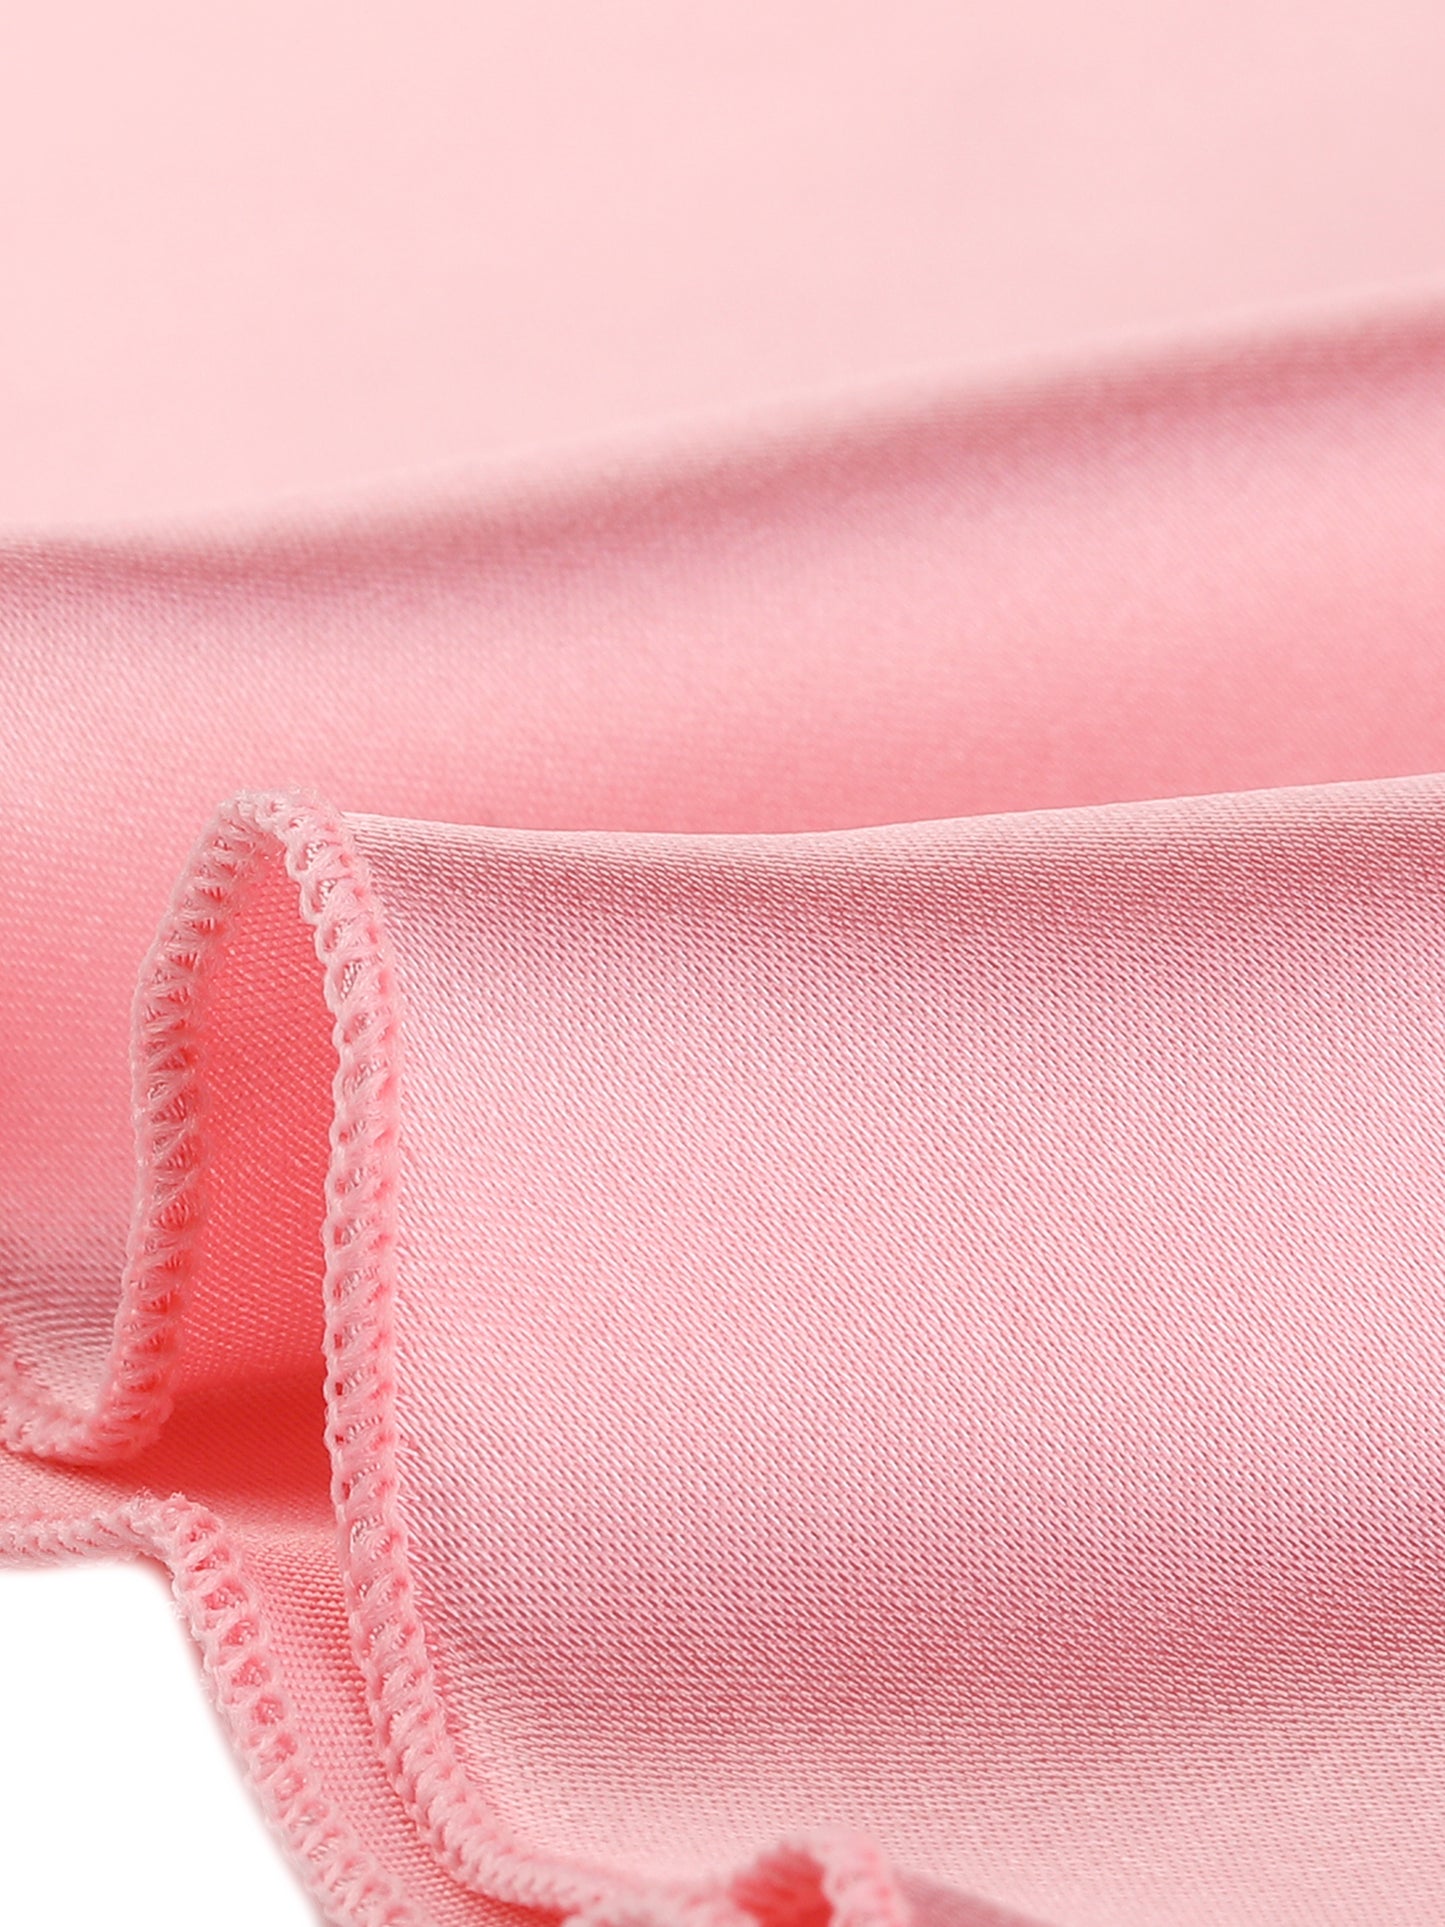 cheibear Satin Lingerie Lace Trim Cami Tops Shorts Sleepwear Pajamas Sets Light Pink